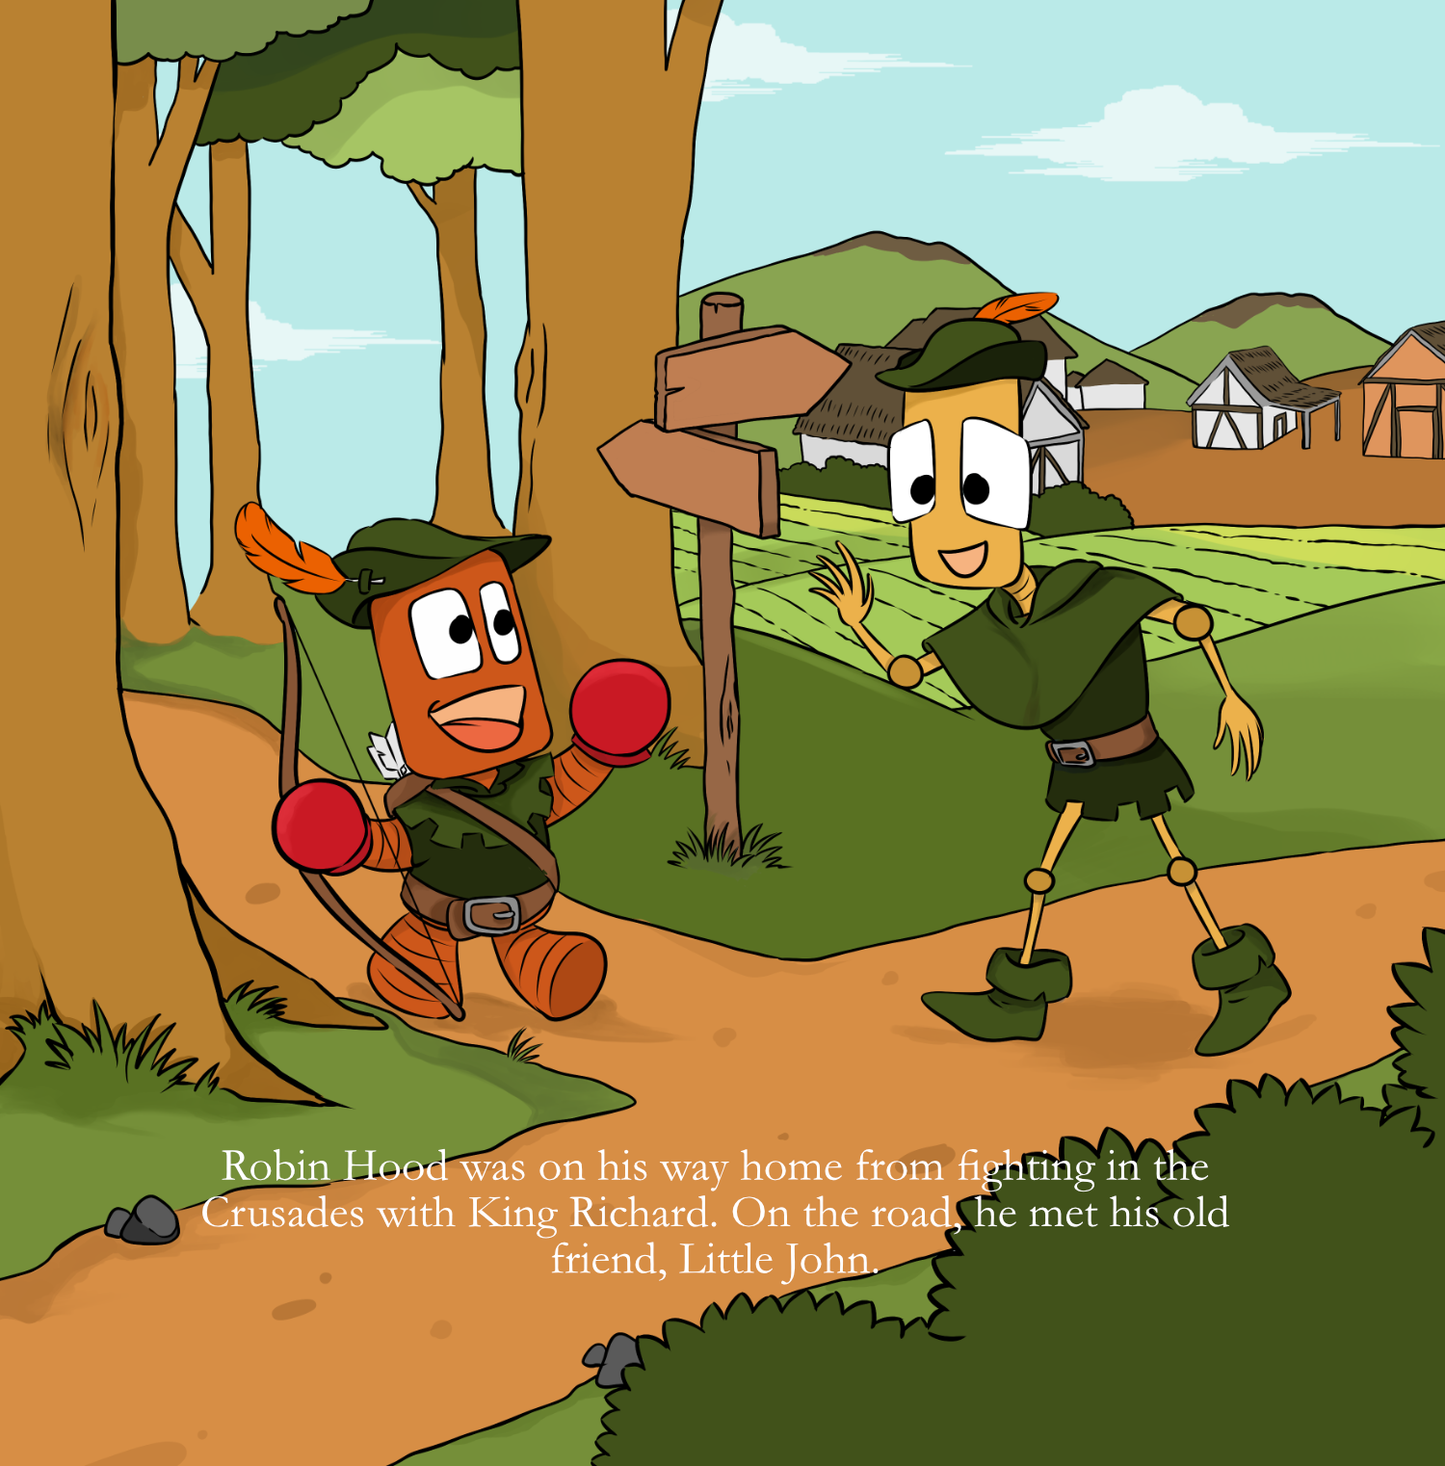 Bopbot & Bowbot - Robin Hood